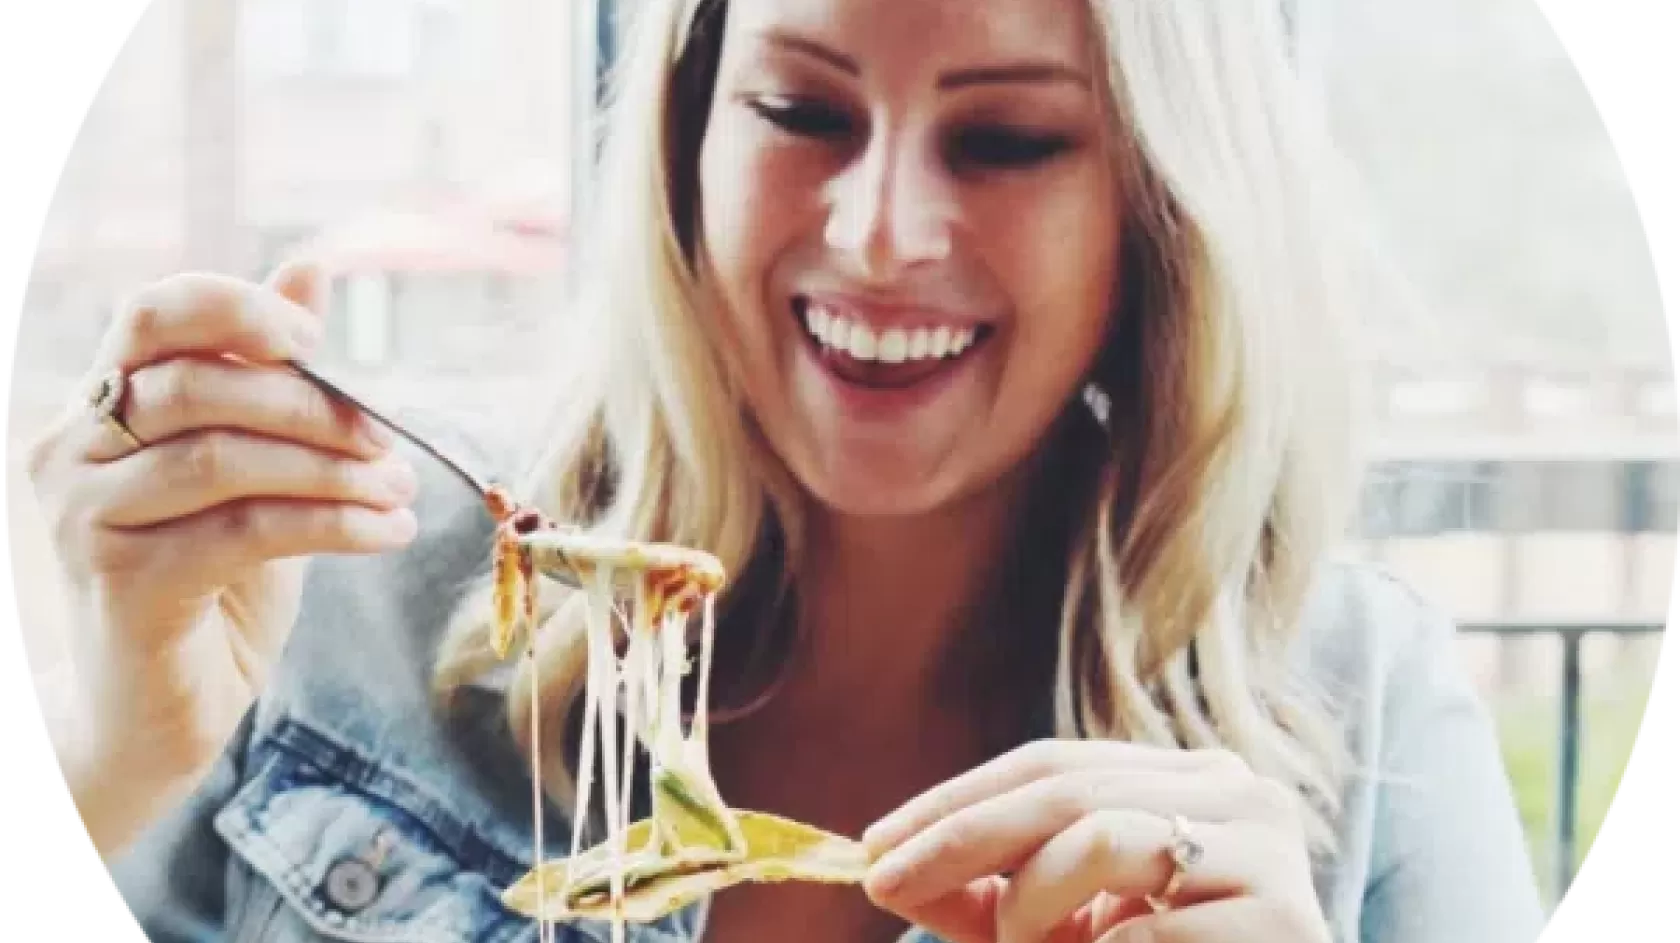 A woman enjoying pasta